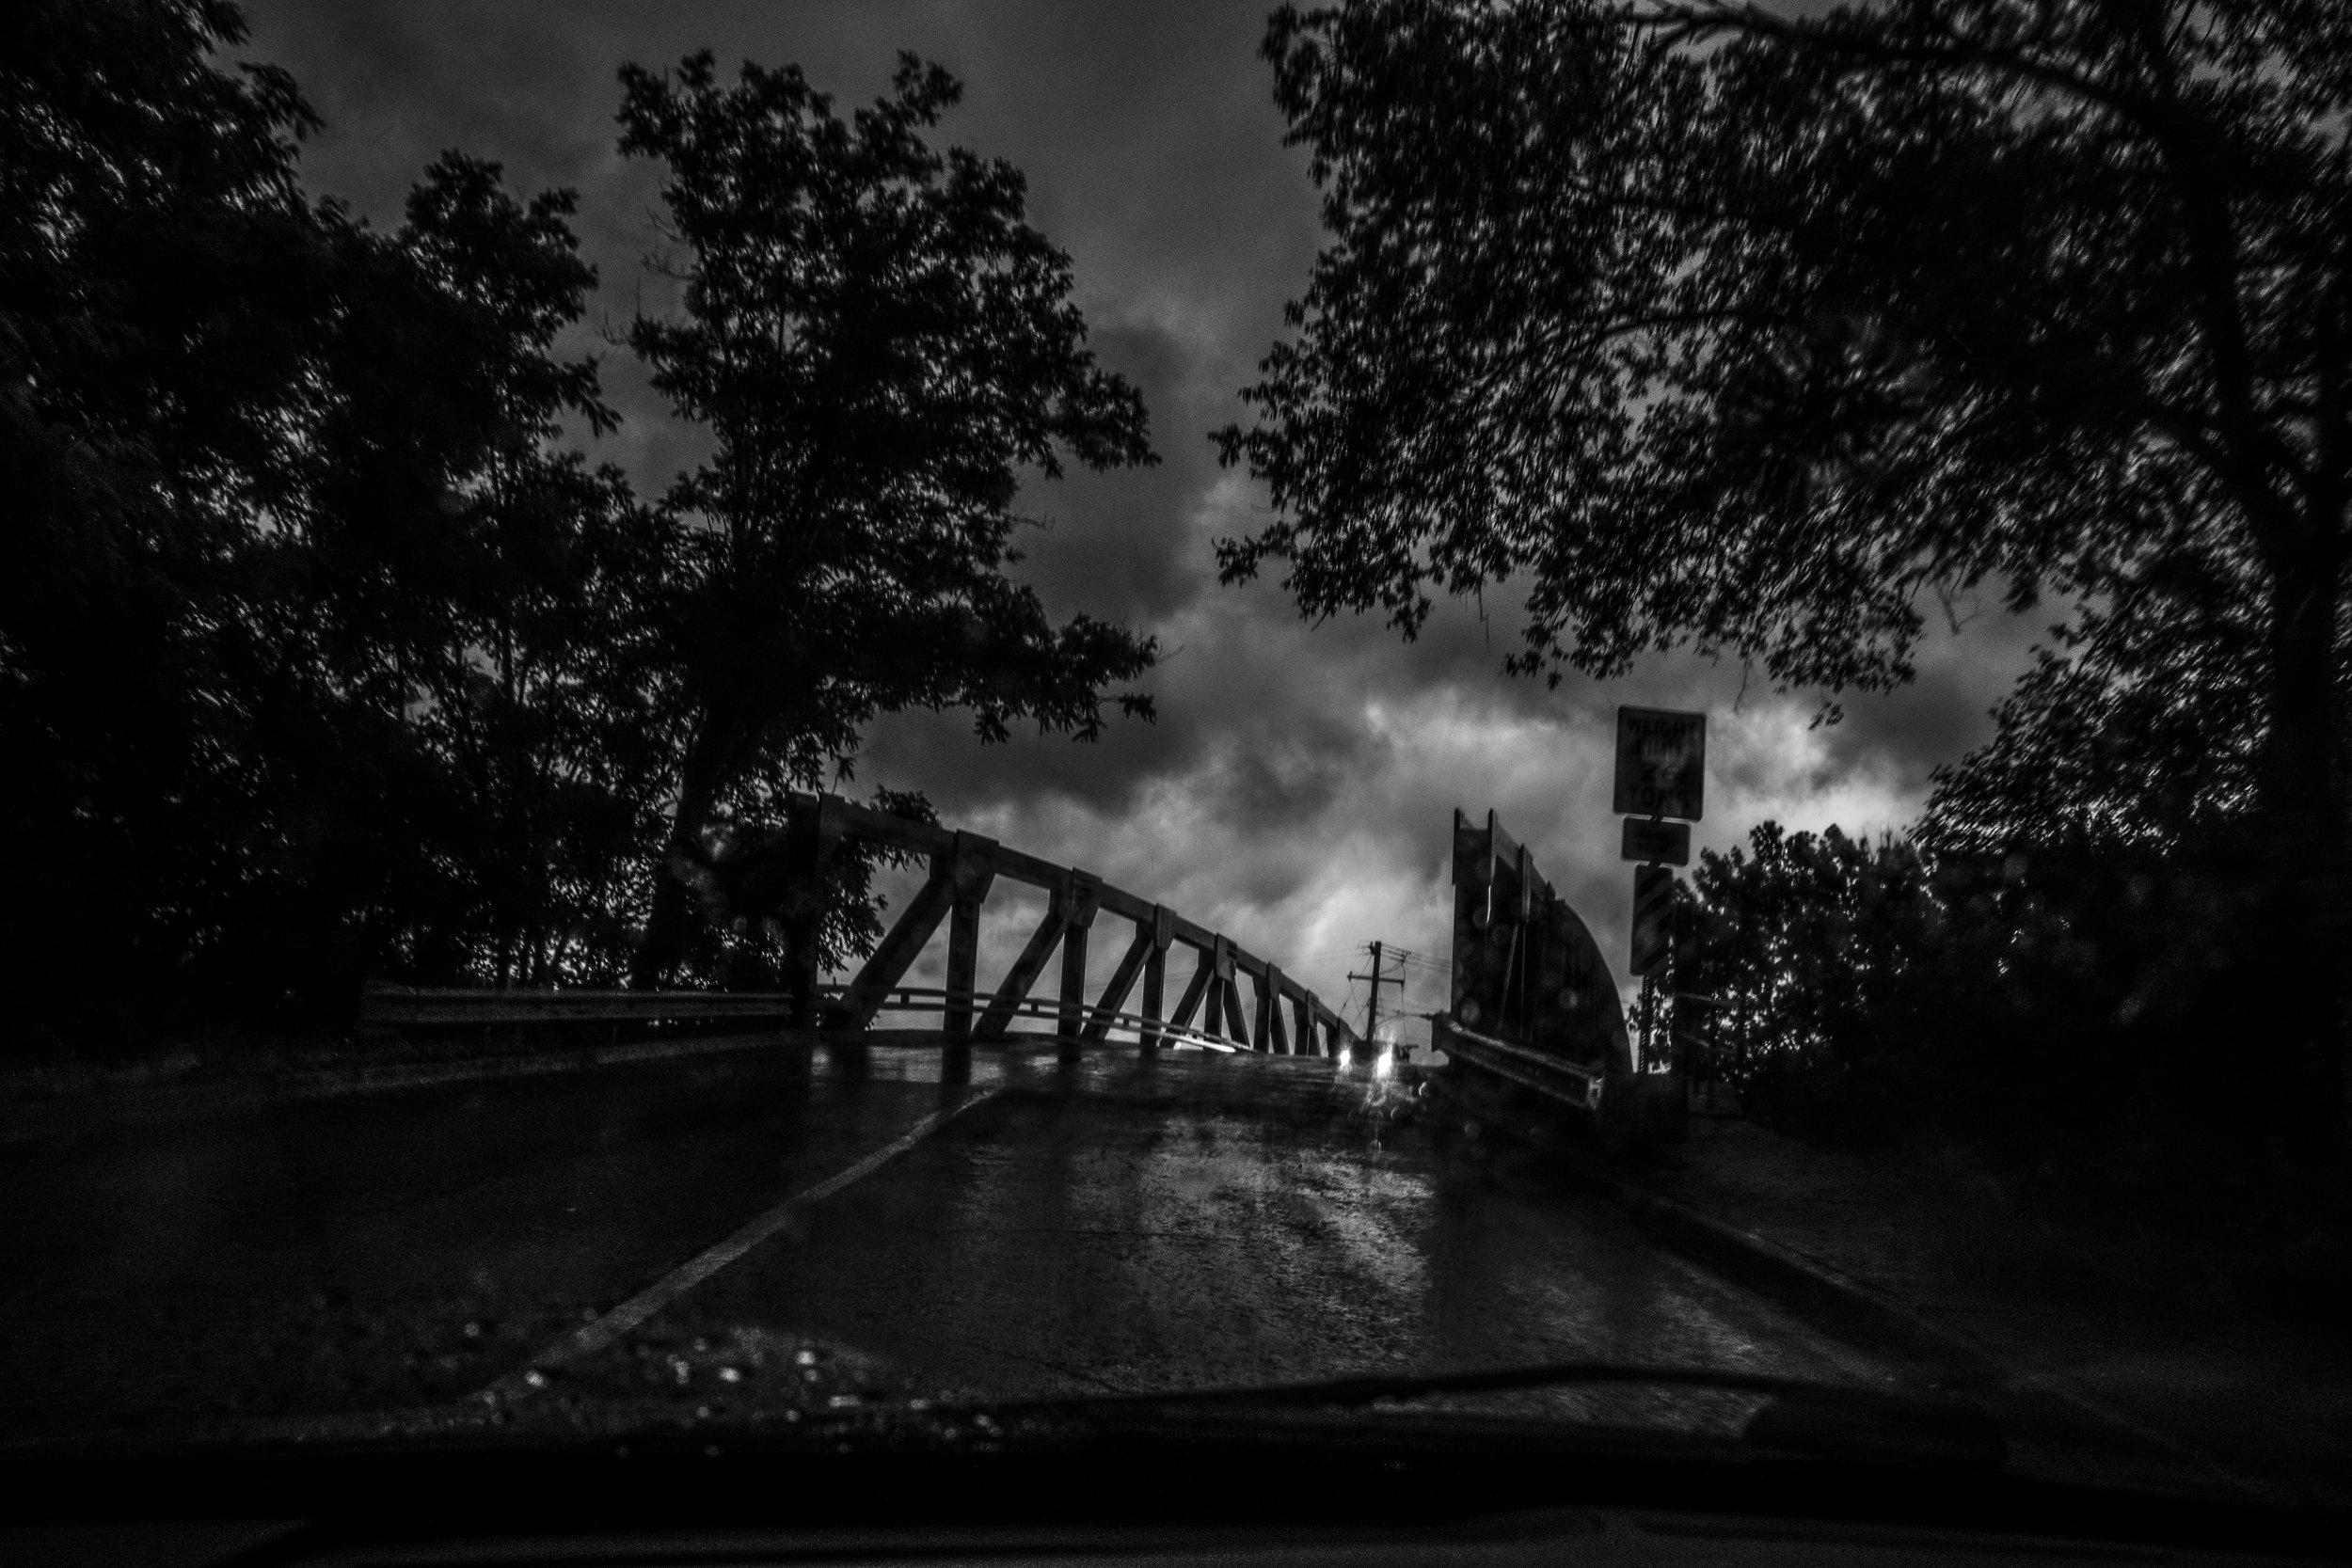  The South Clark Street bridge in Mexico, Missouri as seen during a rainstorm on Sunday, Jun. 16, 2019. 